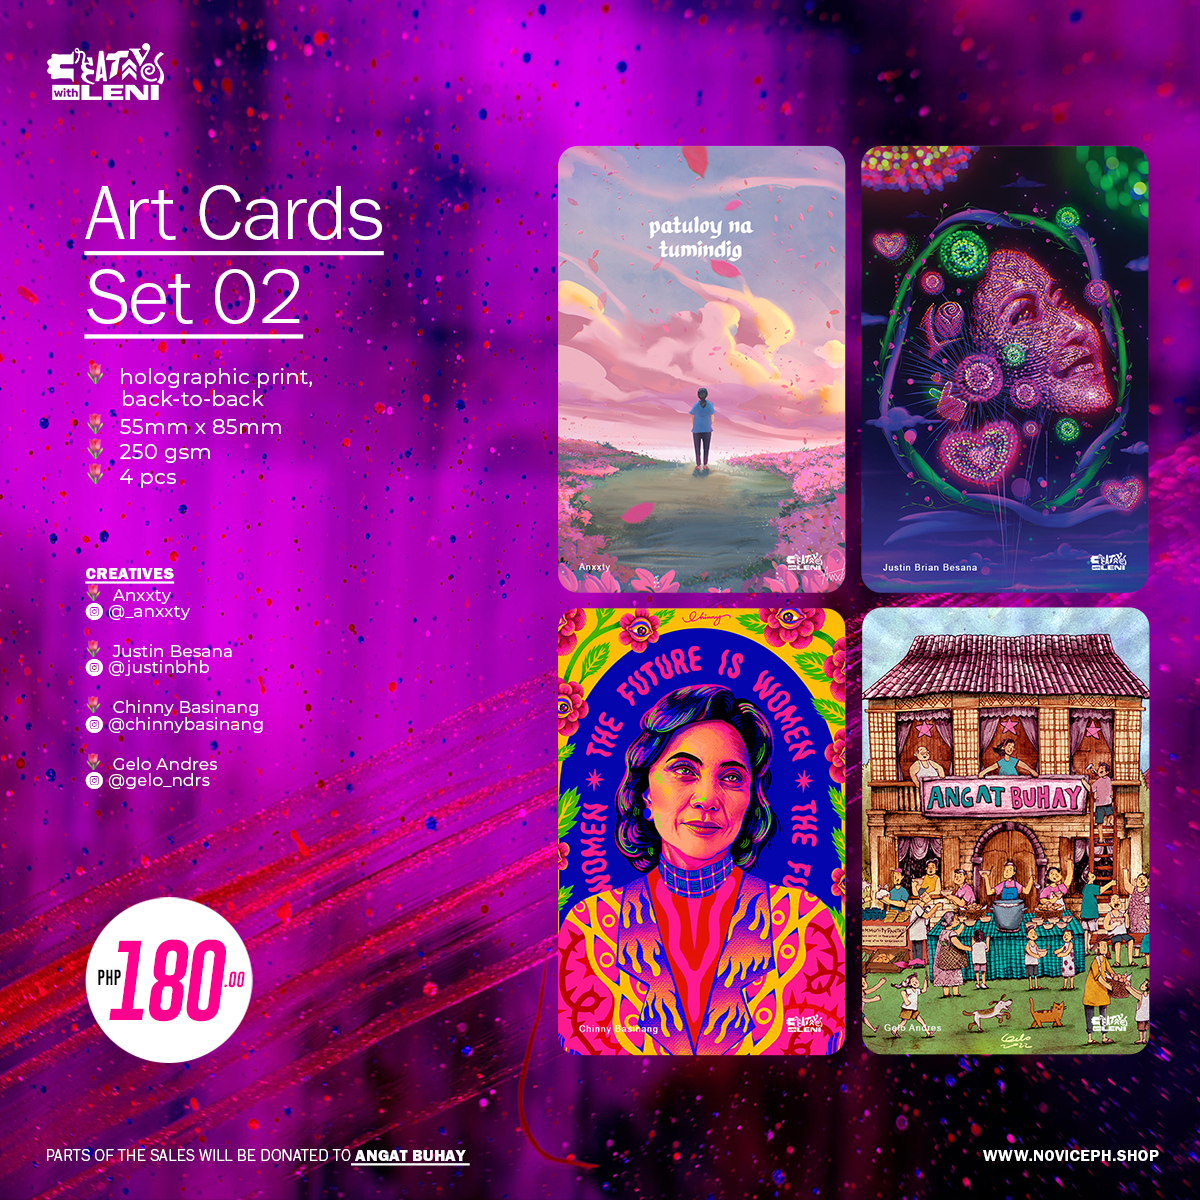 CWL Art Cards